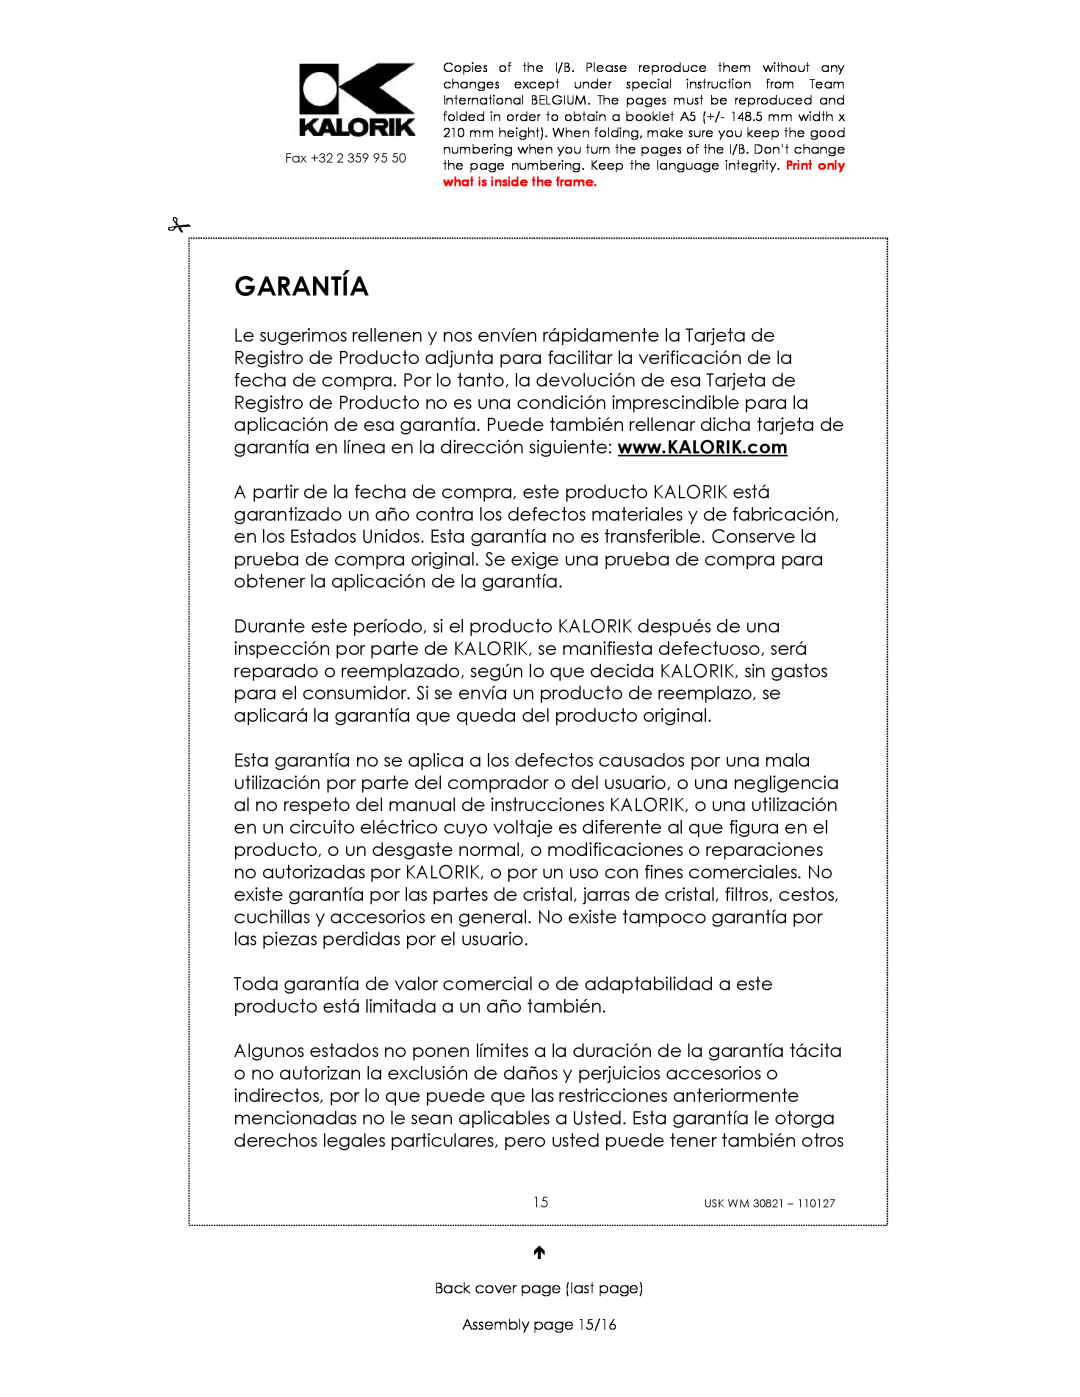 Kalorik USK WM 30821 manual Garantía, Back cover page last page Assembly page 15/16 